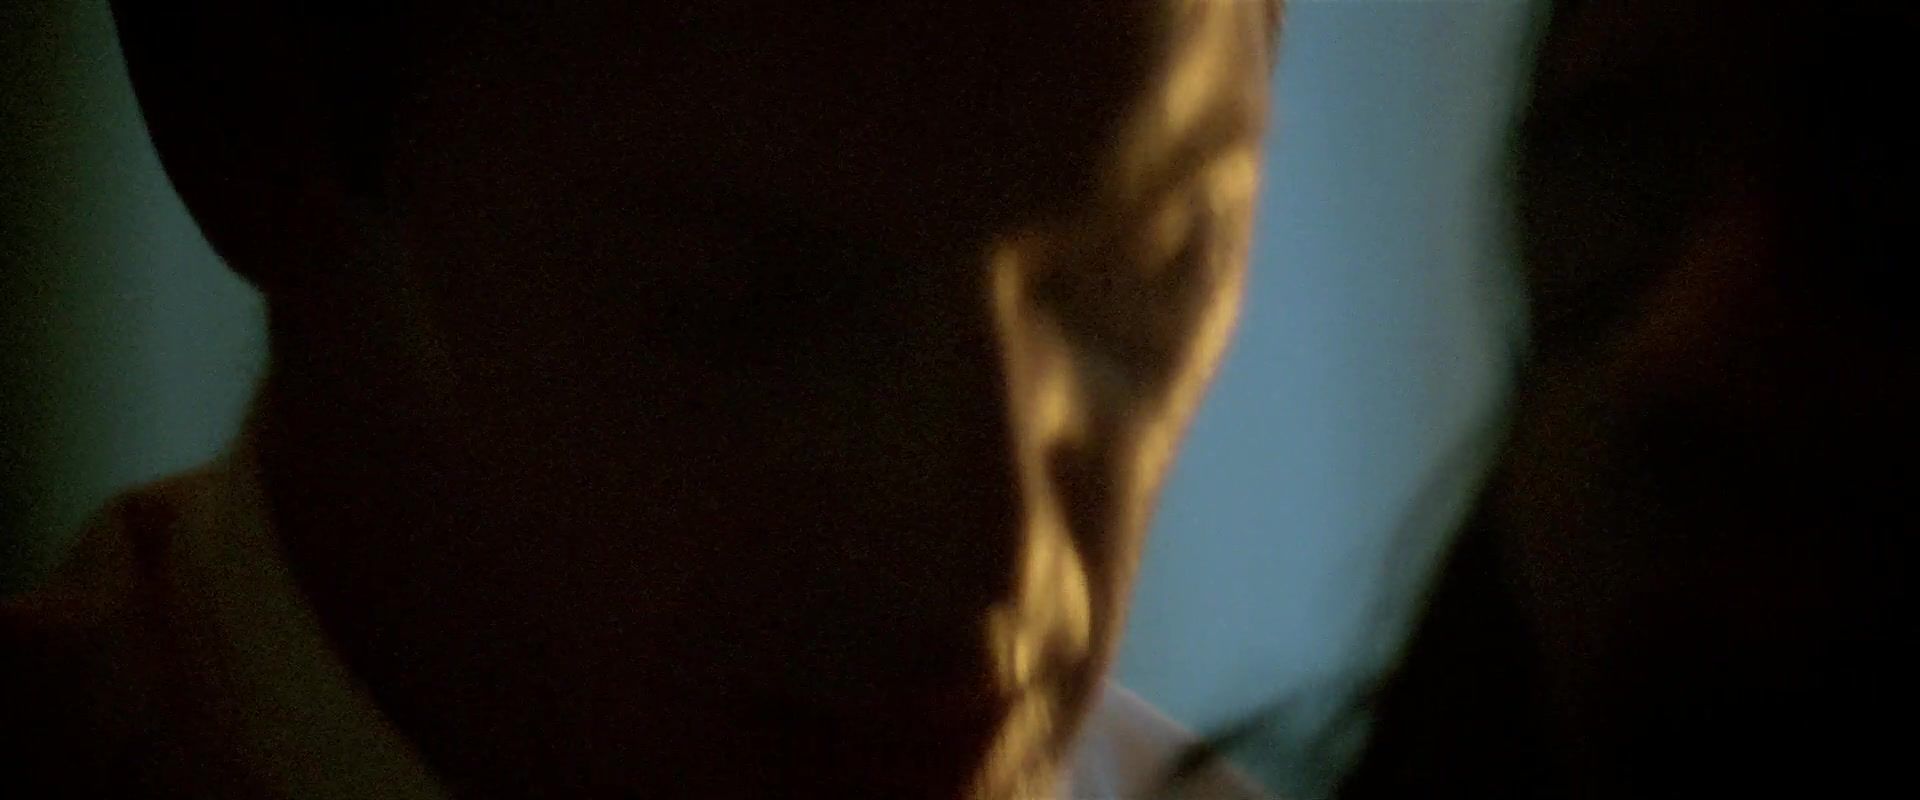 Orgasmo Hot Scene with actress Madeleine Stowe | The movie "Revenge" Lezbi